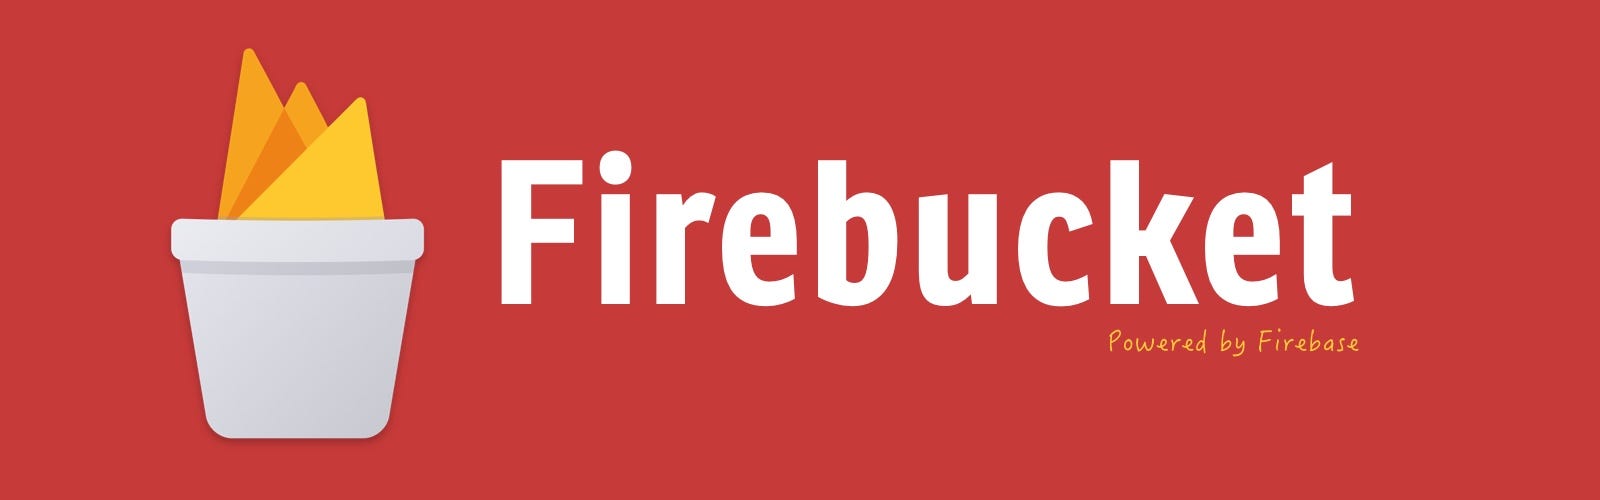 A Glimpse of Firebase, with Firebucket - AndroidPub